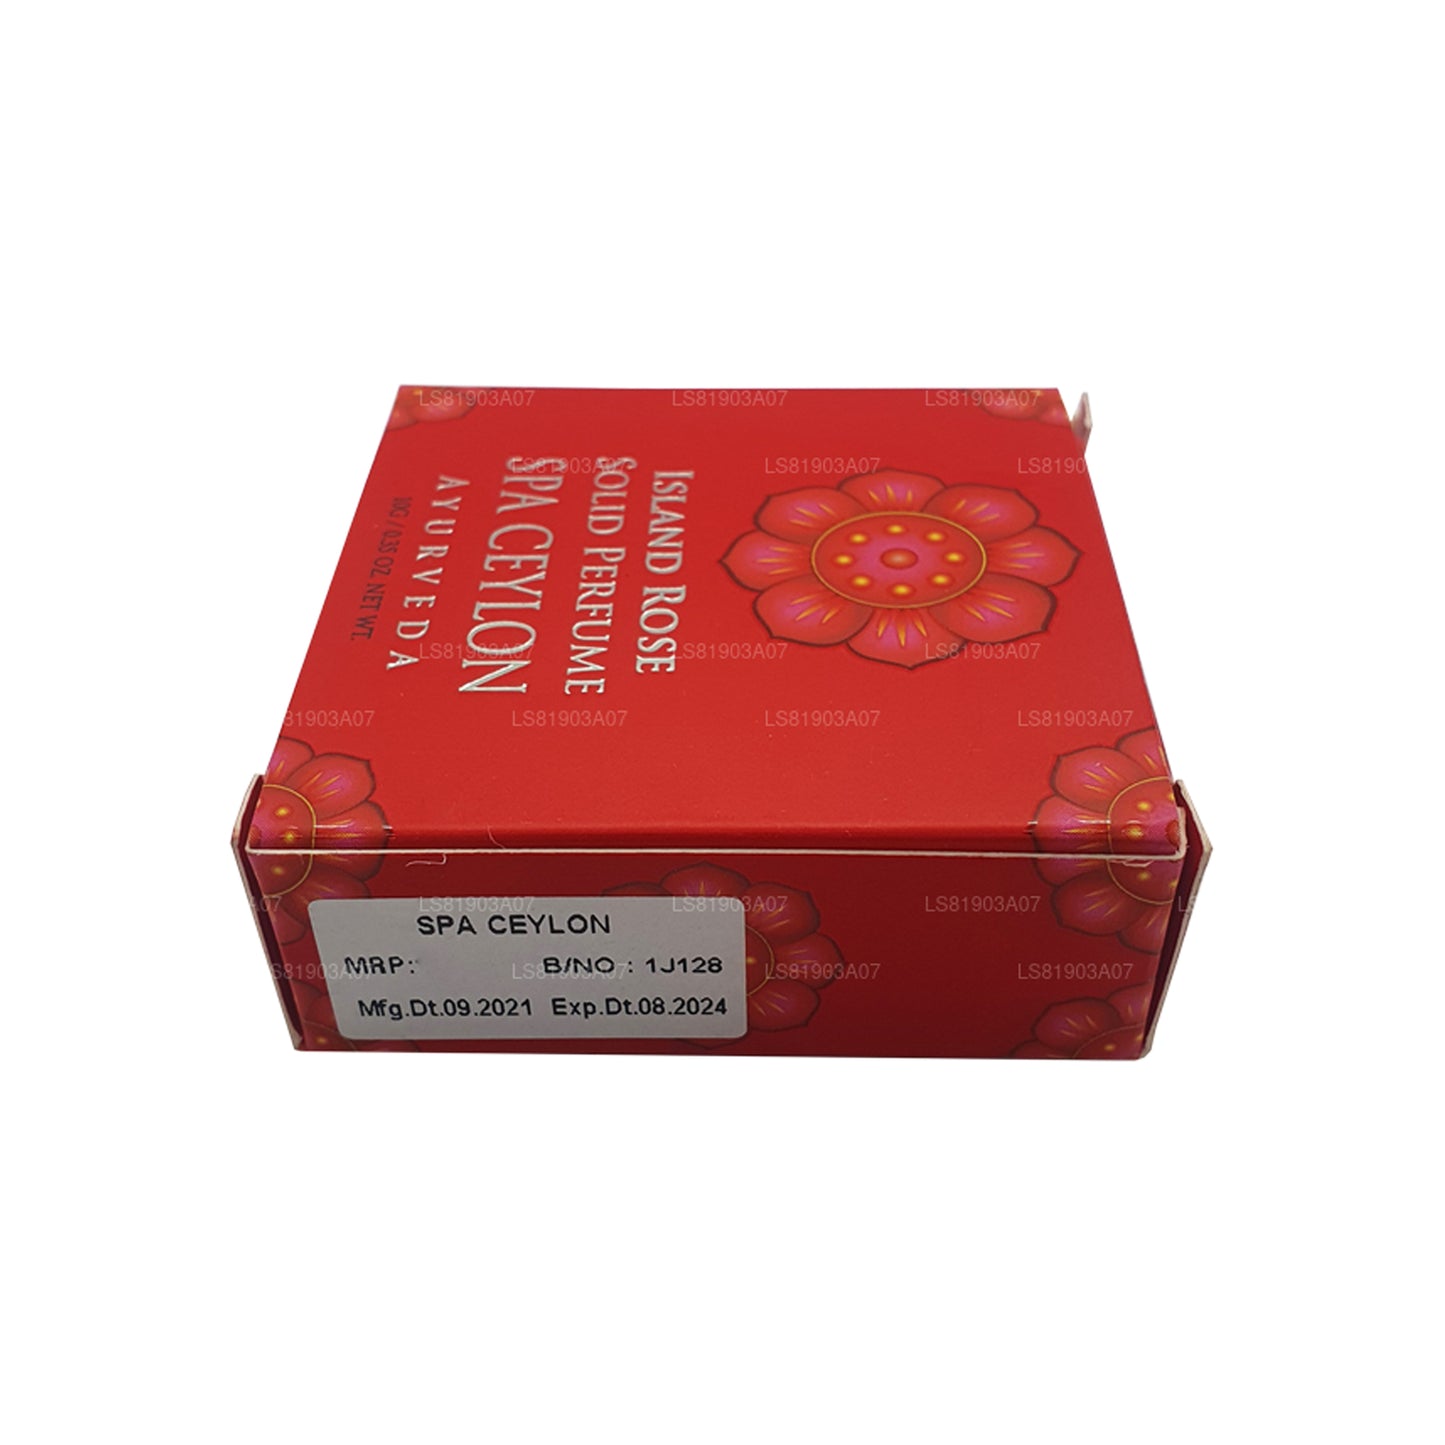 Spa Ceylon Island Rose Solid Perfume (10g)